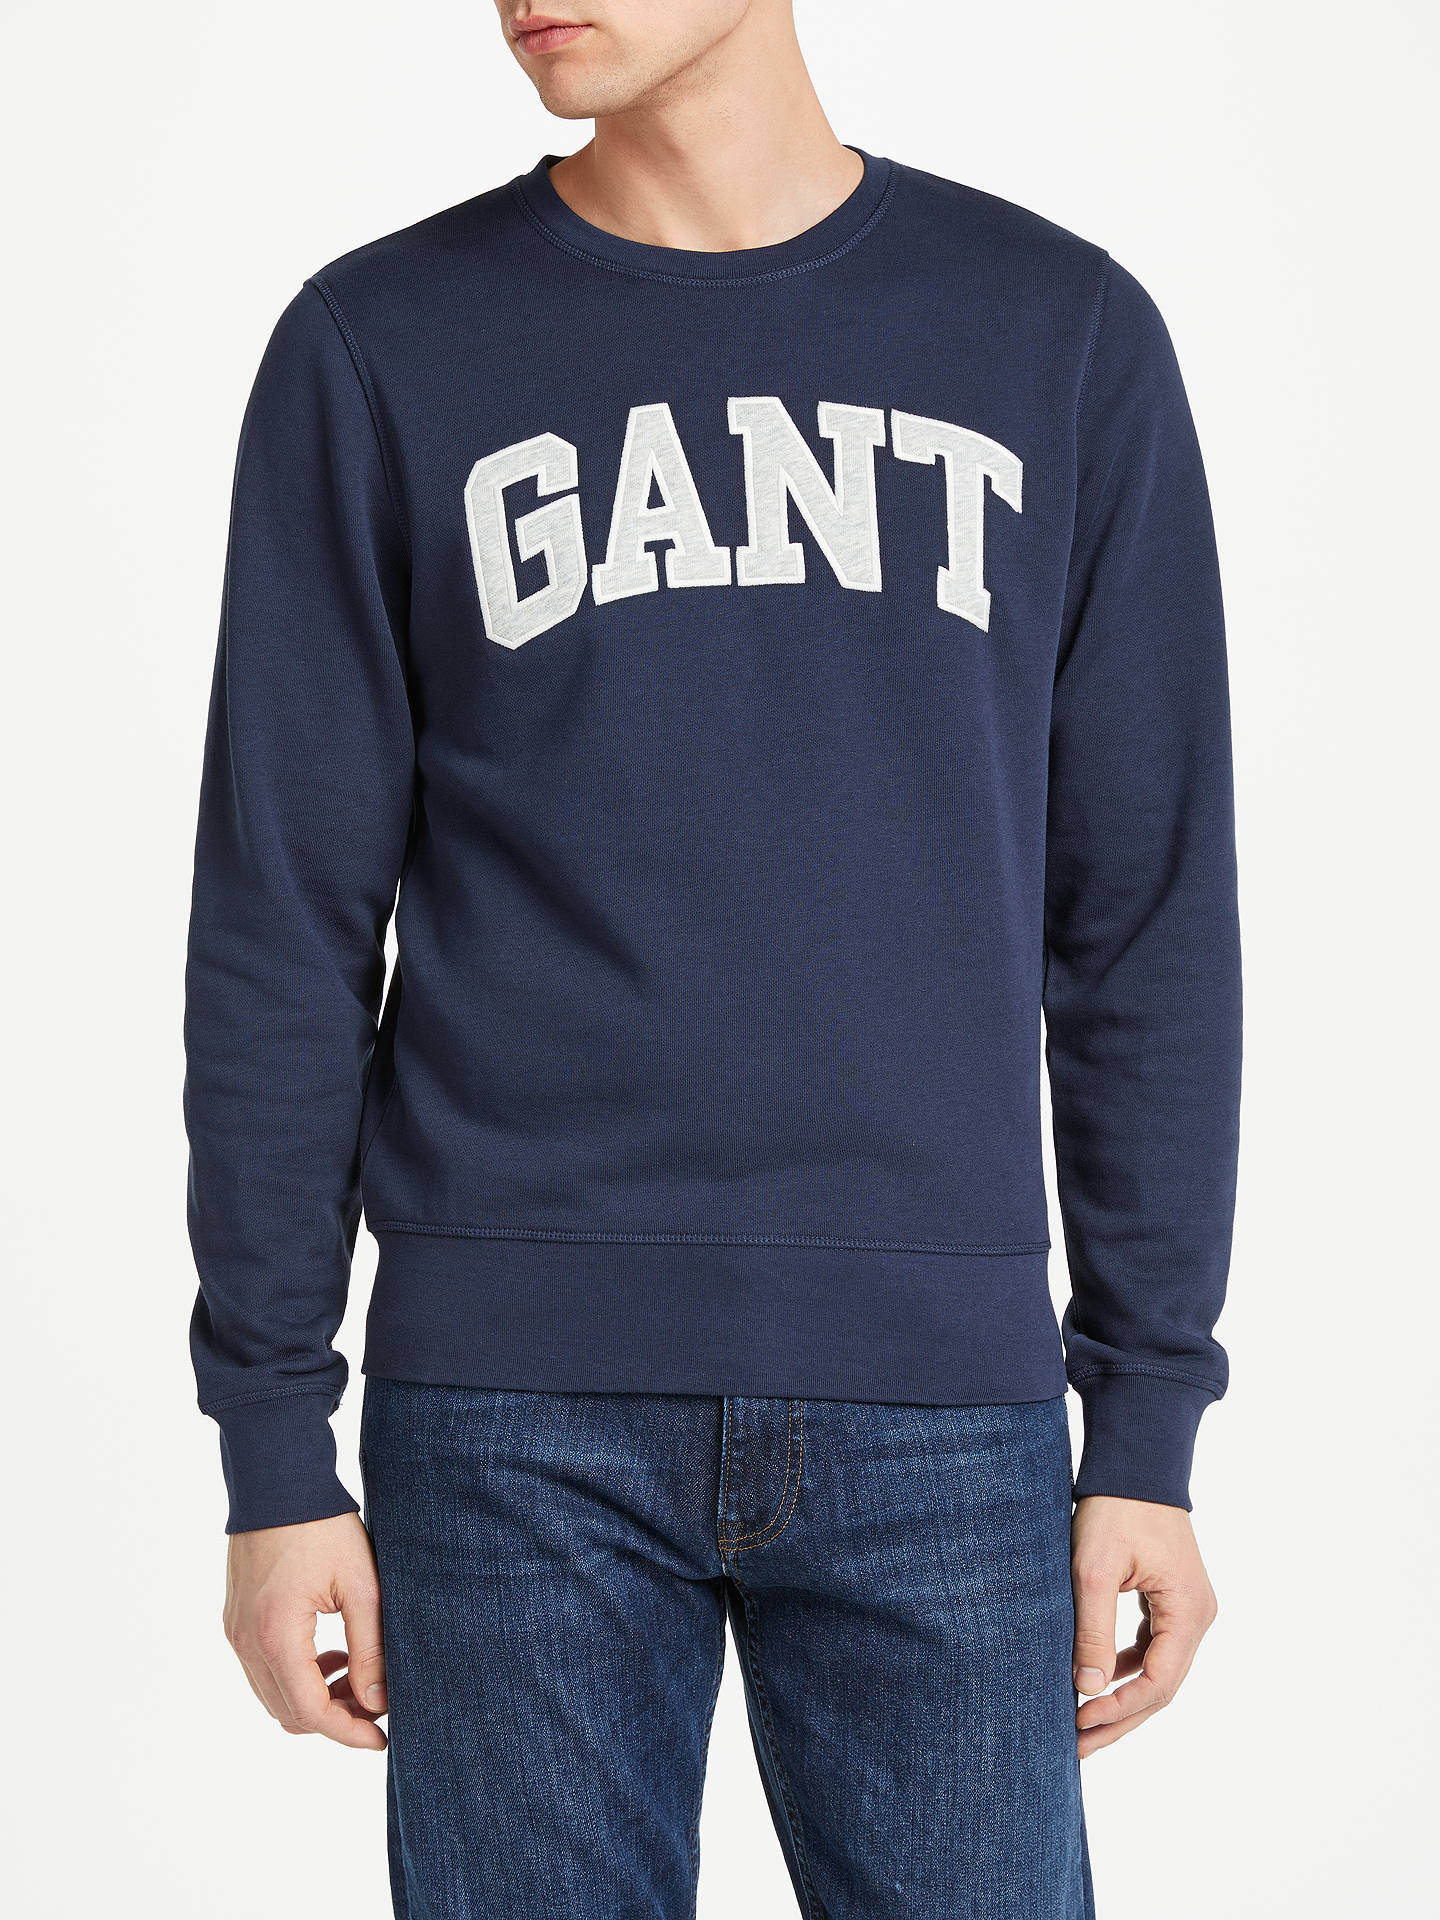 Gant Outline Crew Neck Sweatshirt, Navy at John Lewis & Partners